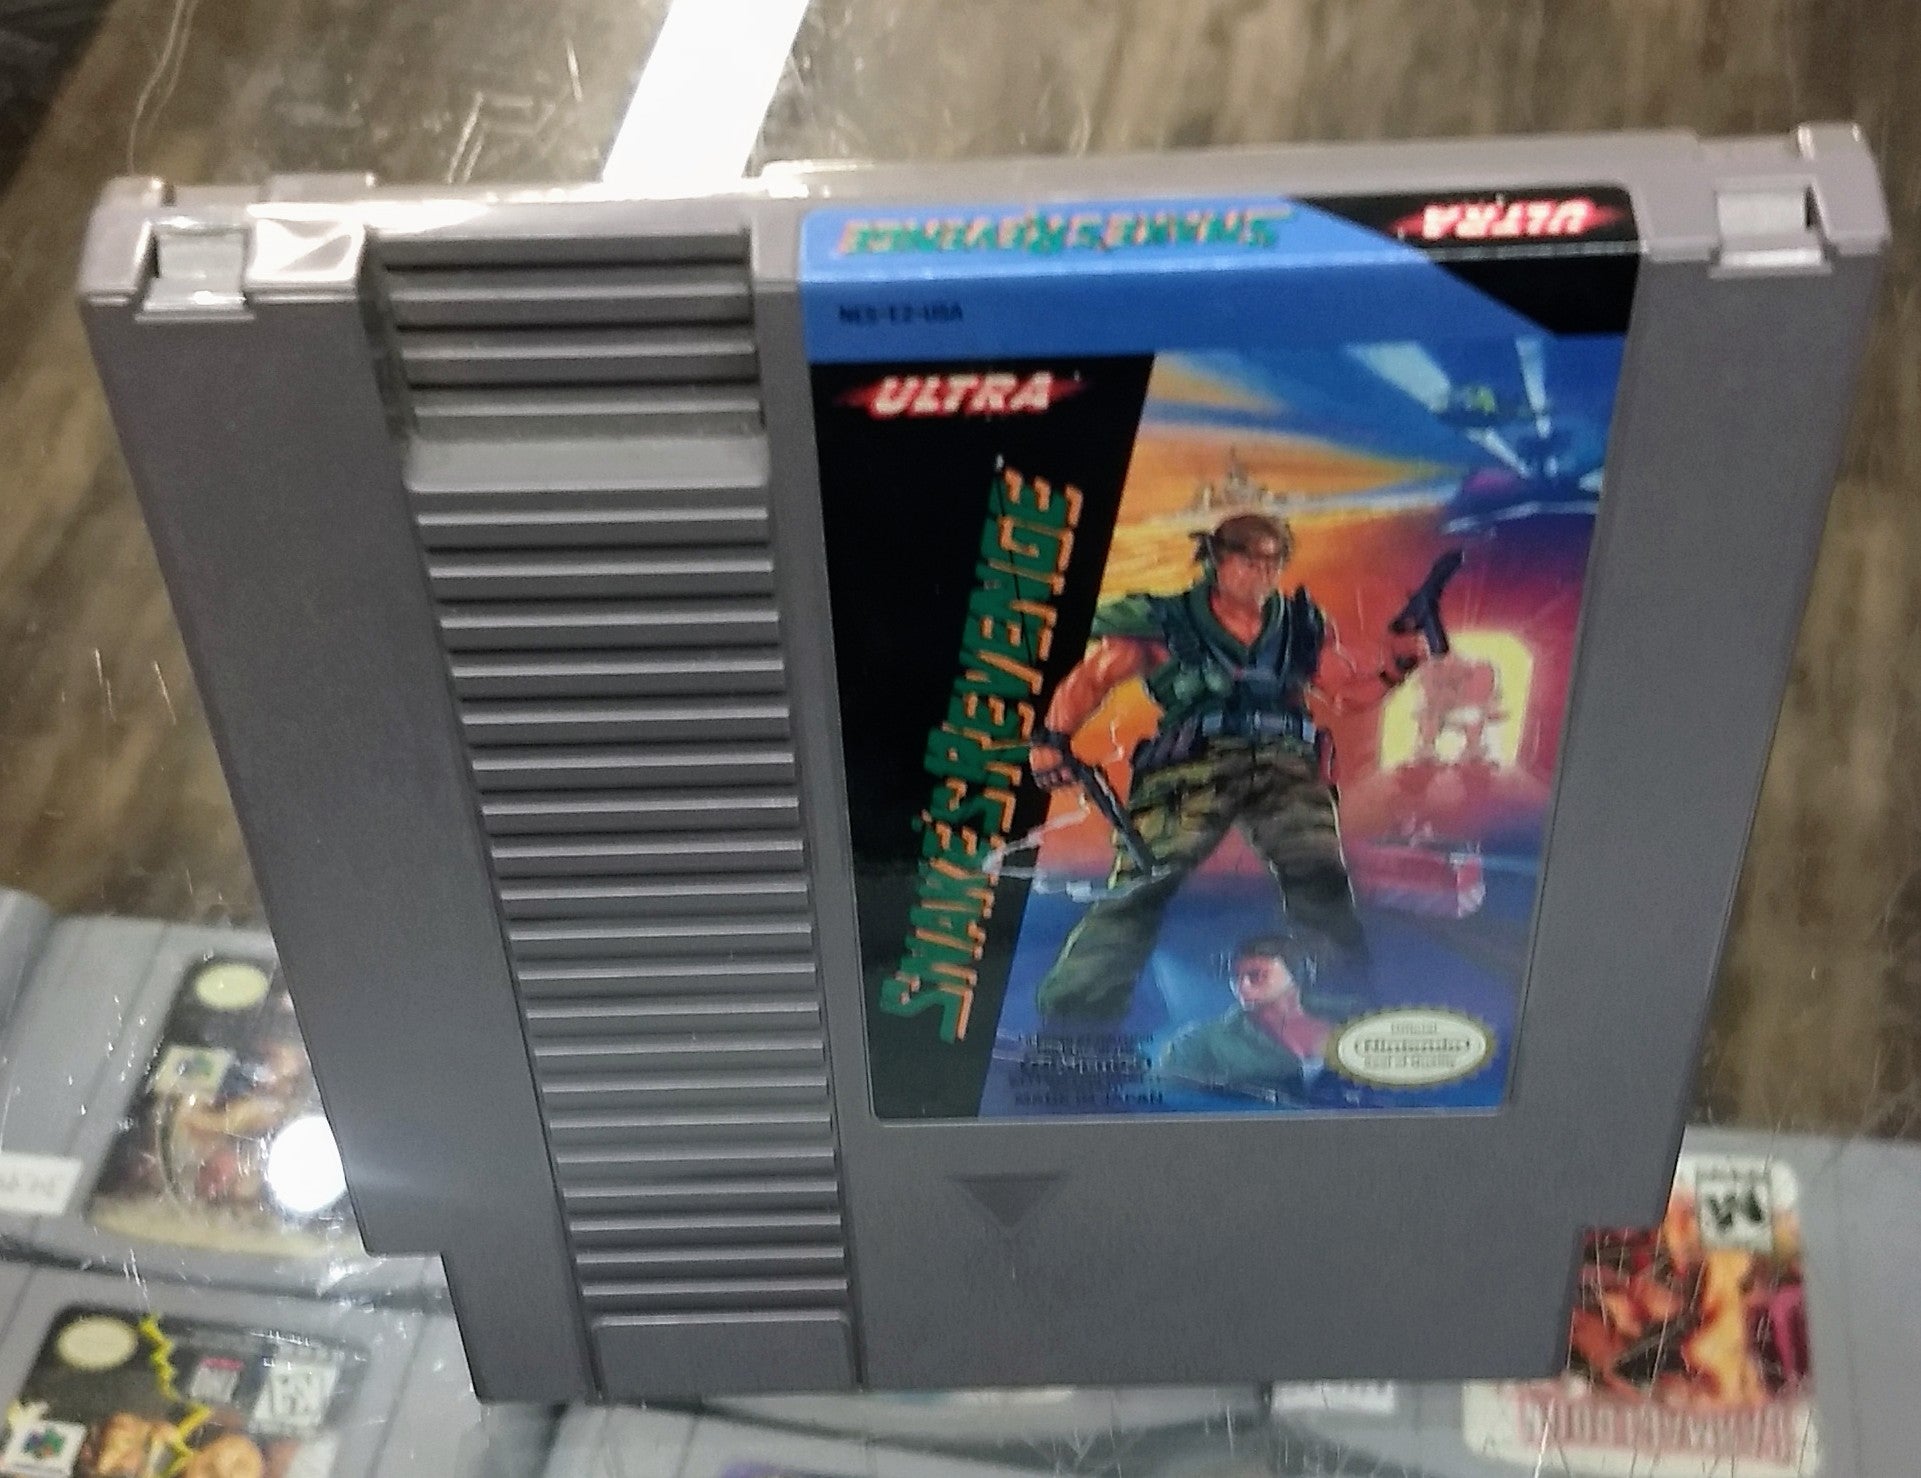 METAL GEAR 2 SNAKE'S REVENGE (NINTENDO NES) - jeux video game-x